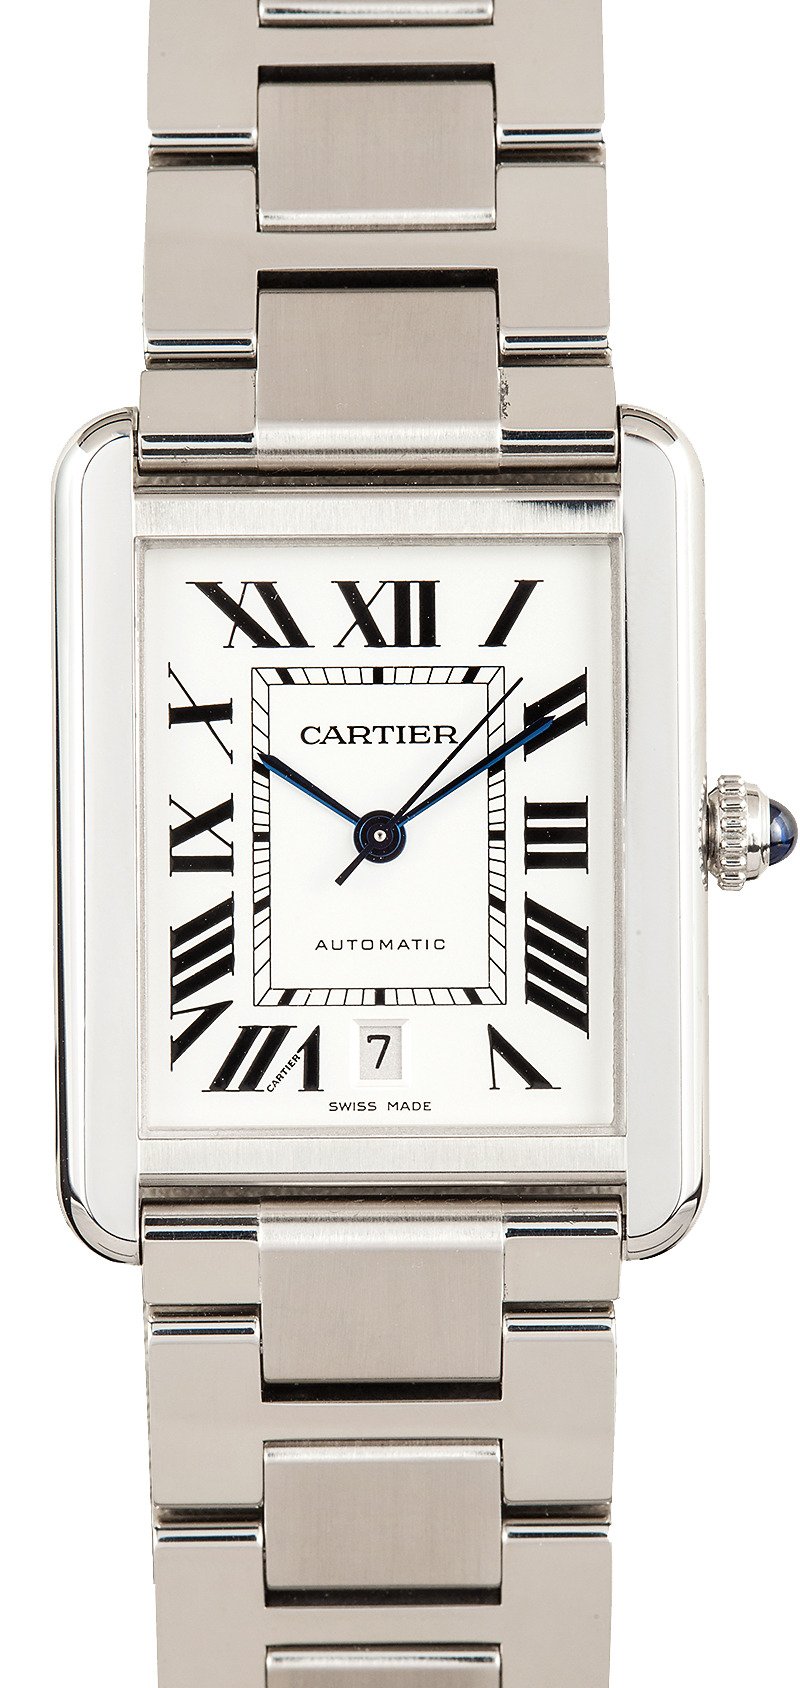 Buy Cartier Tank Solo XL at Bob's Watches